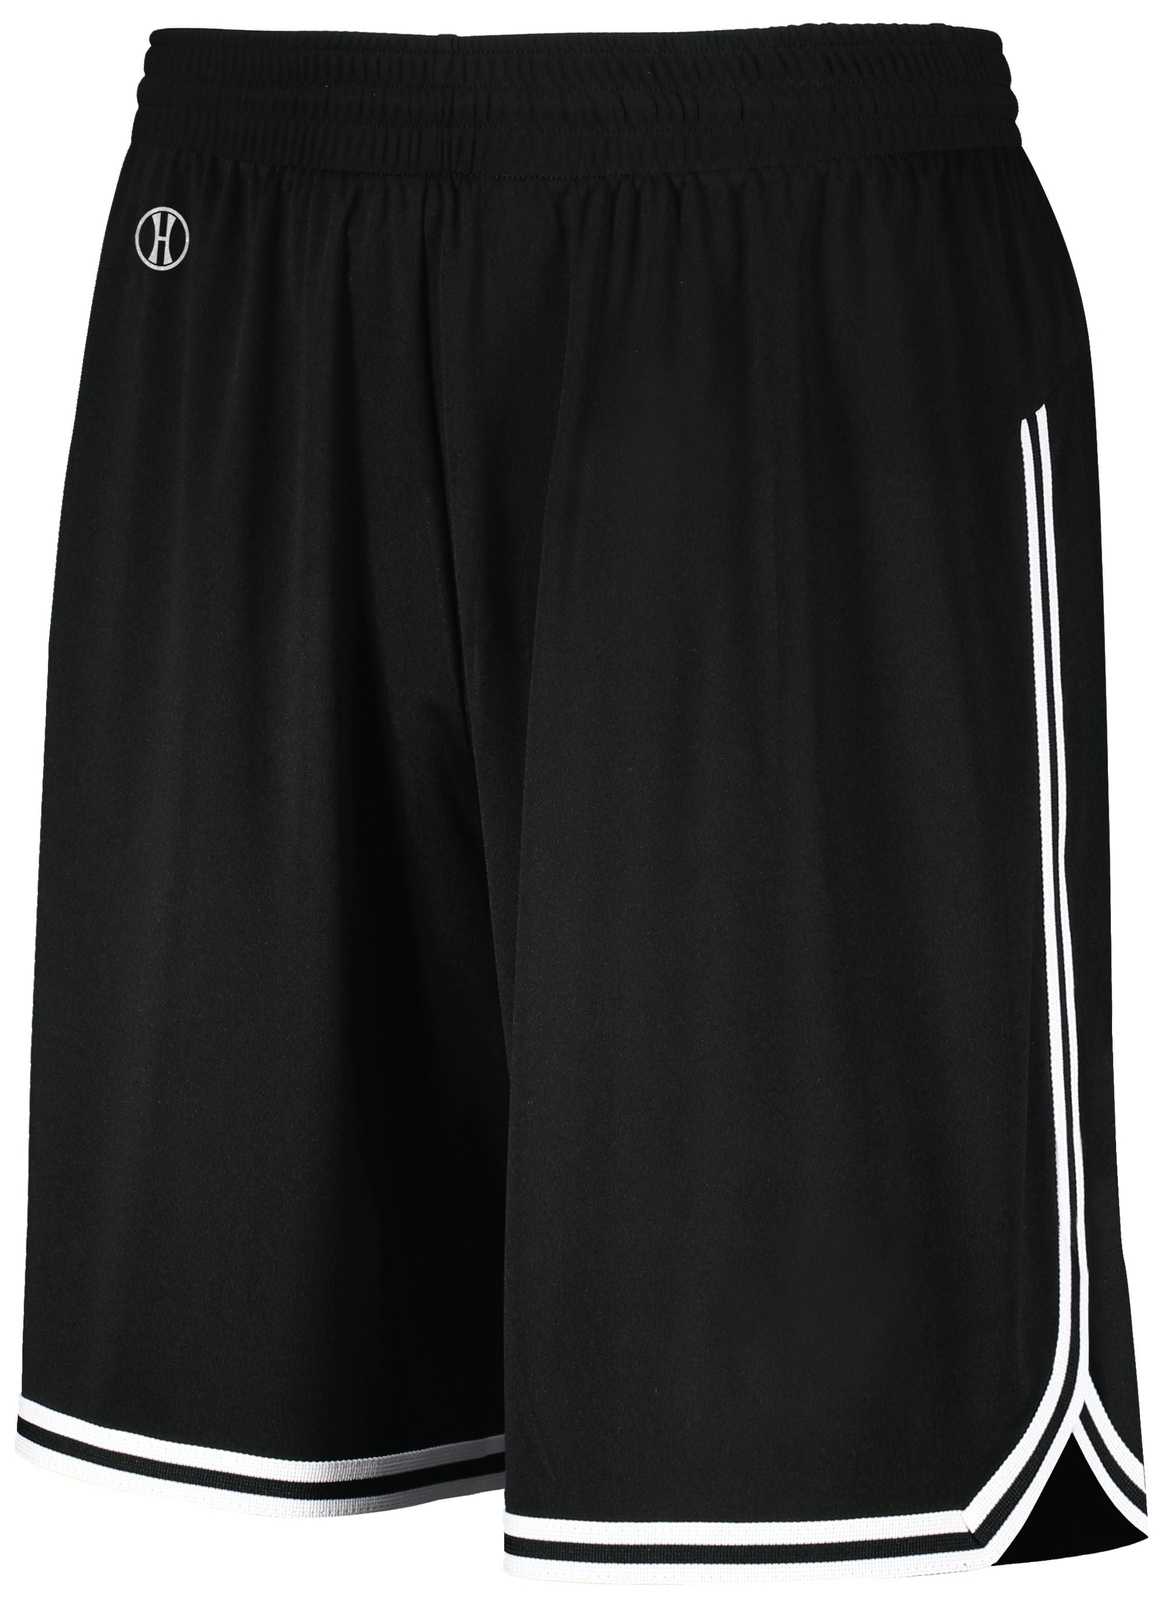 Holloway 224077 Retro Basketball Shorts - Black White - HIT a Double